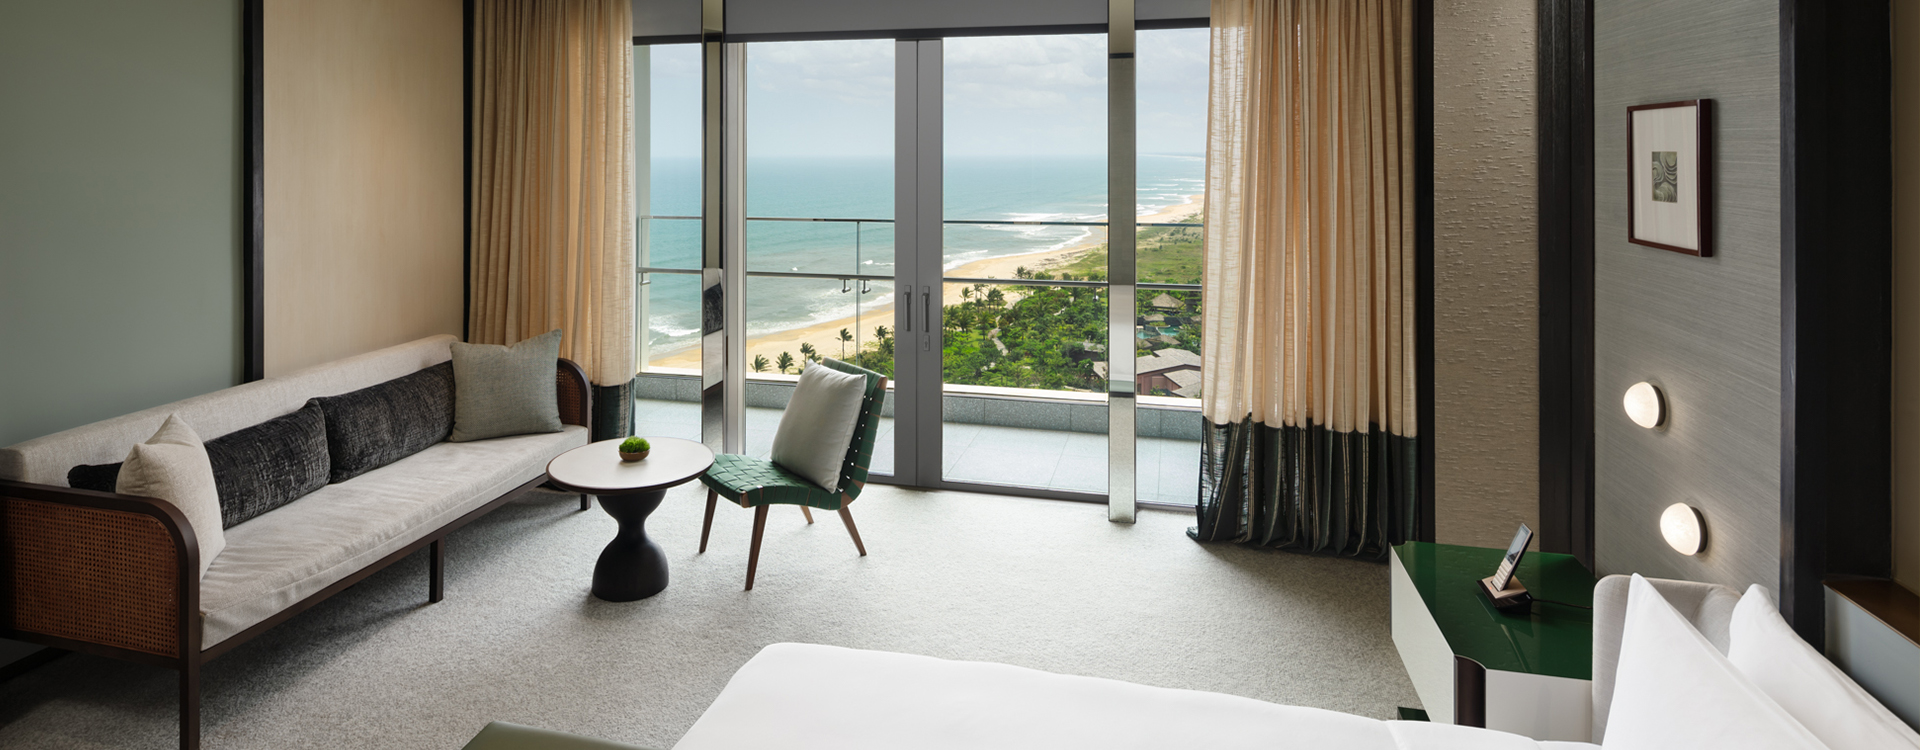 New World Hoiana Beach Resort Rooms & Suites